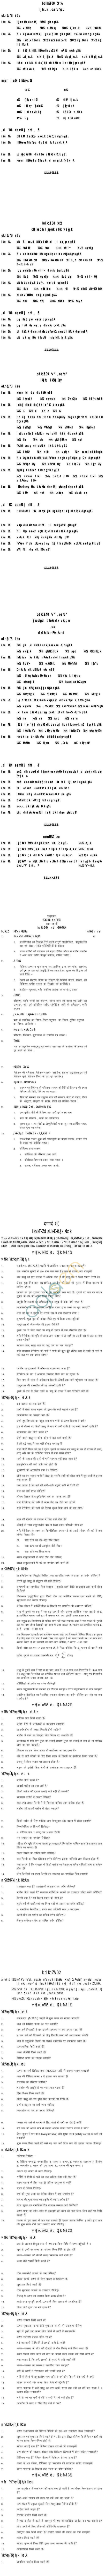 Chhattisgarh Board Class 11 Question Bank - Vigyan ke Tatva